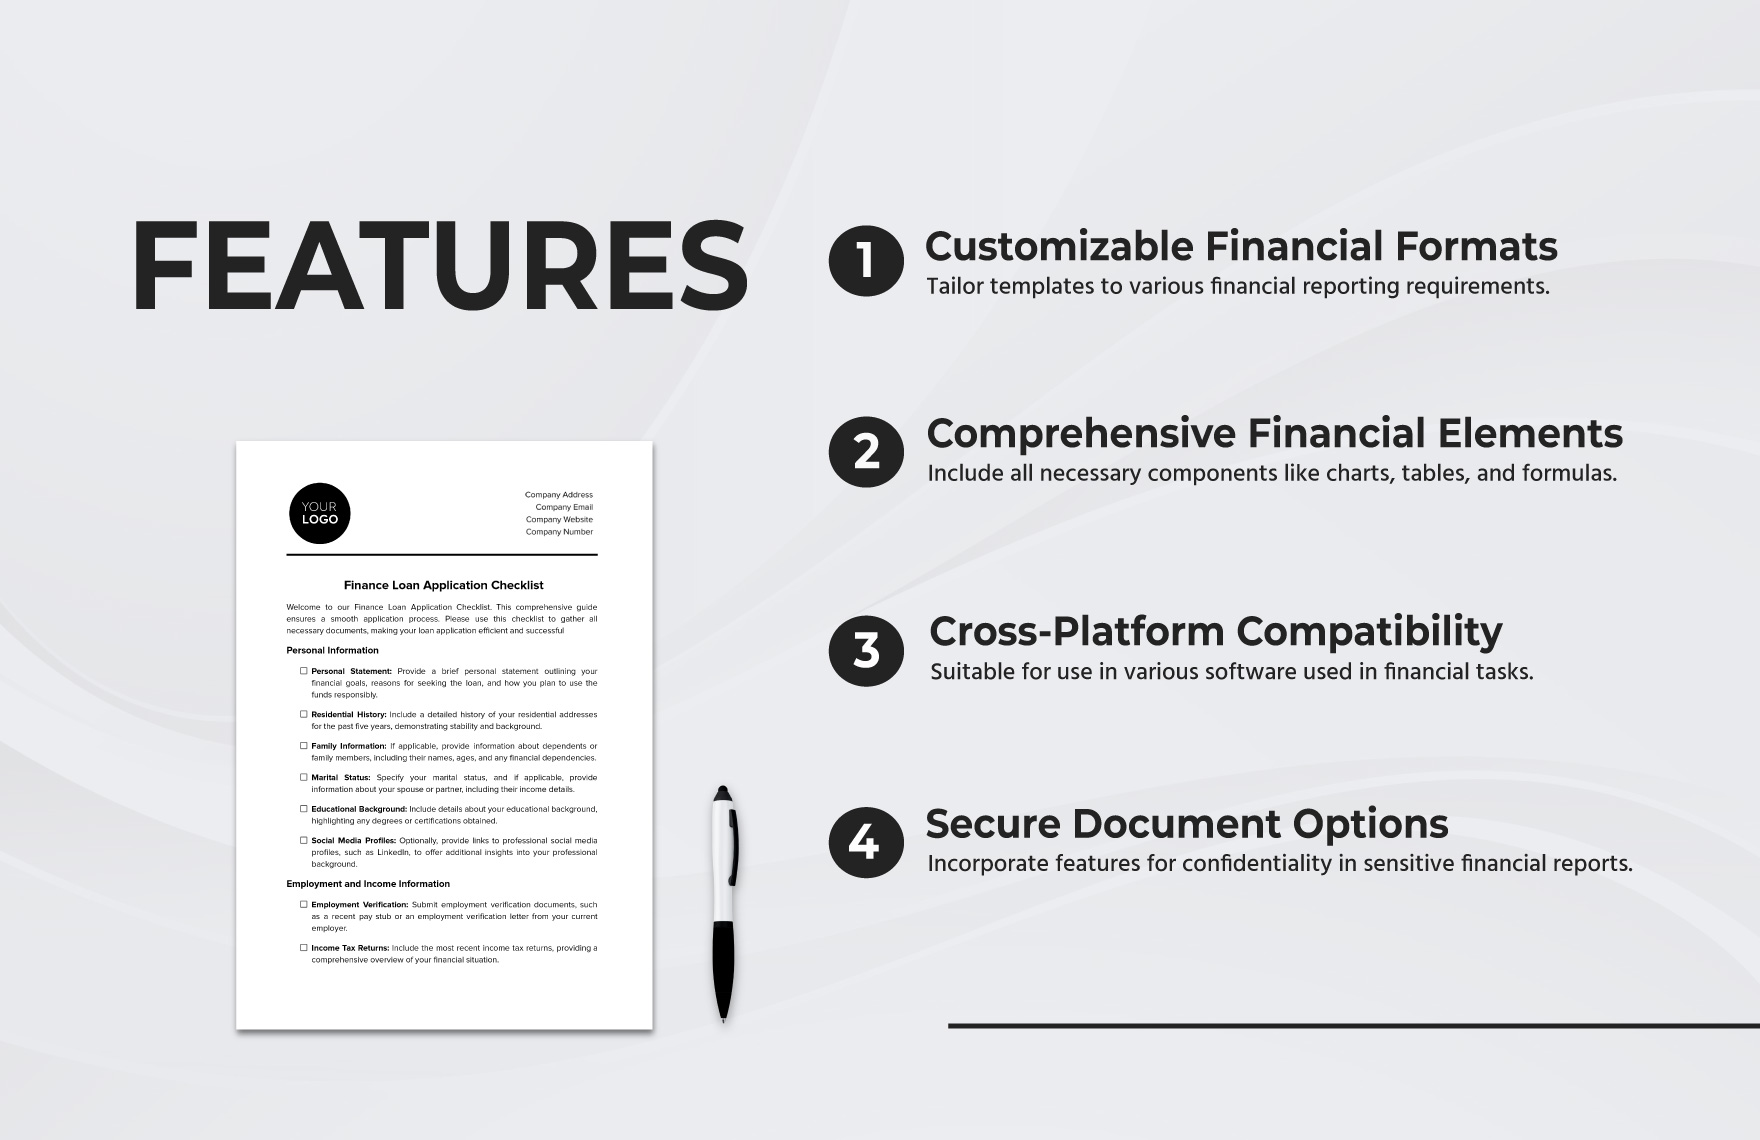 Finance Loan Application Checklist Template